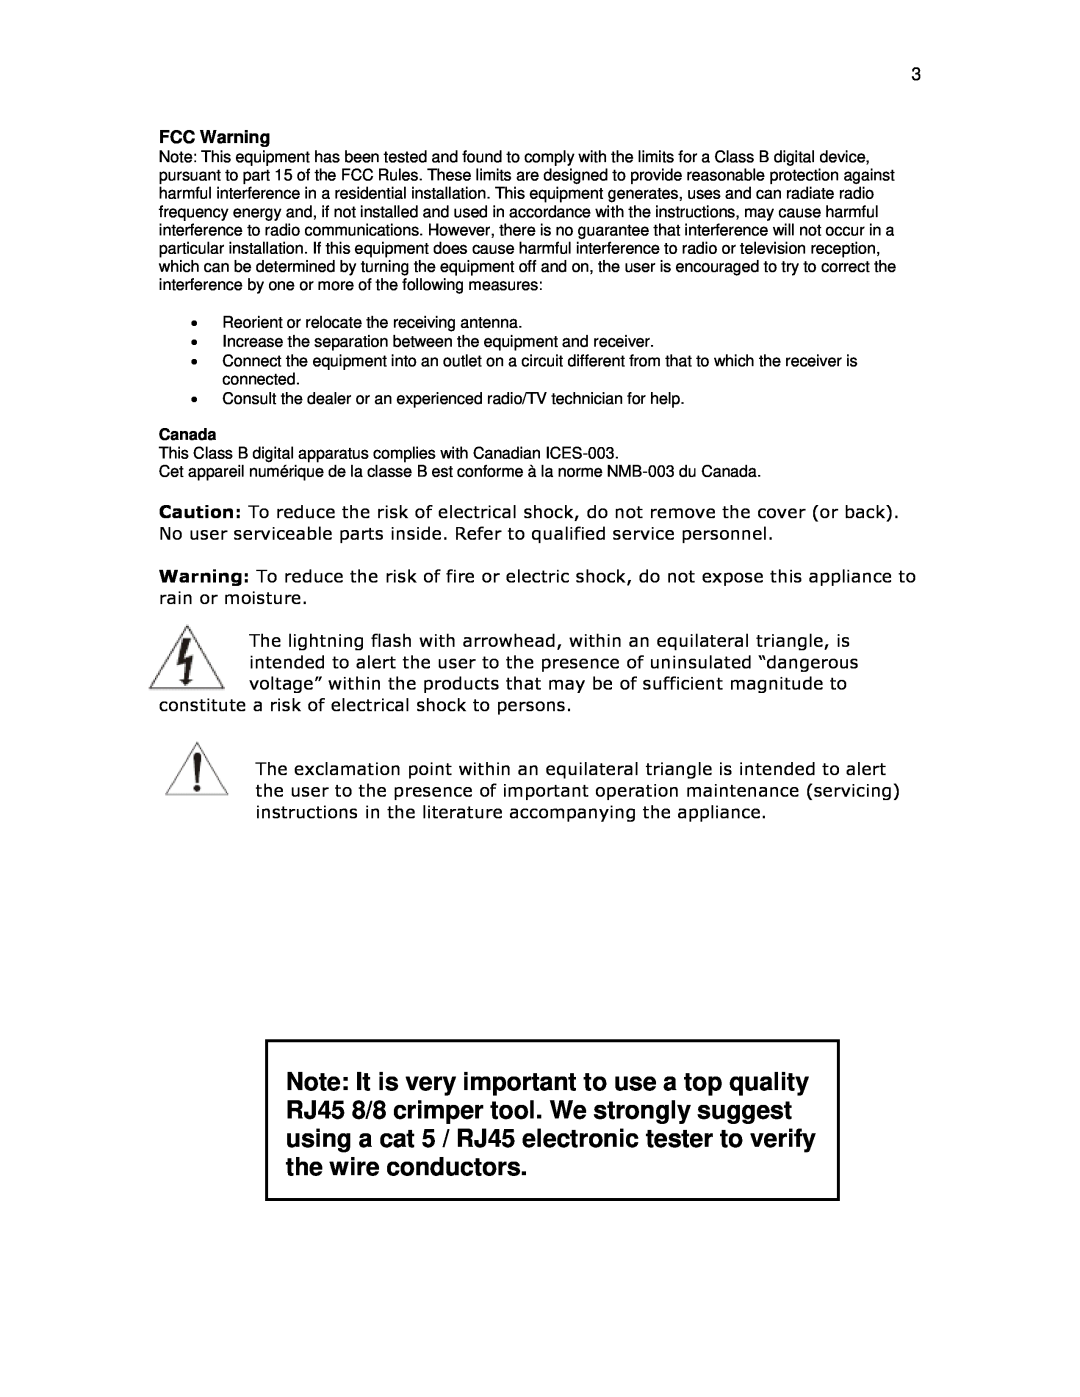 Knoll Systems C16 installation instructions FCC Warning 